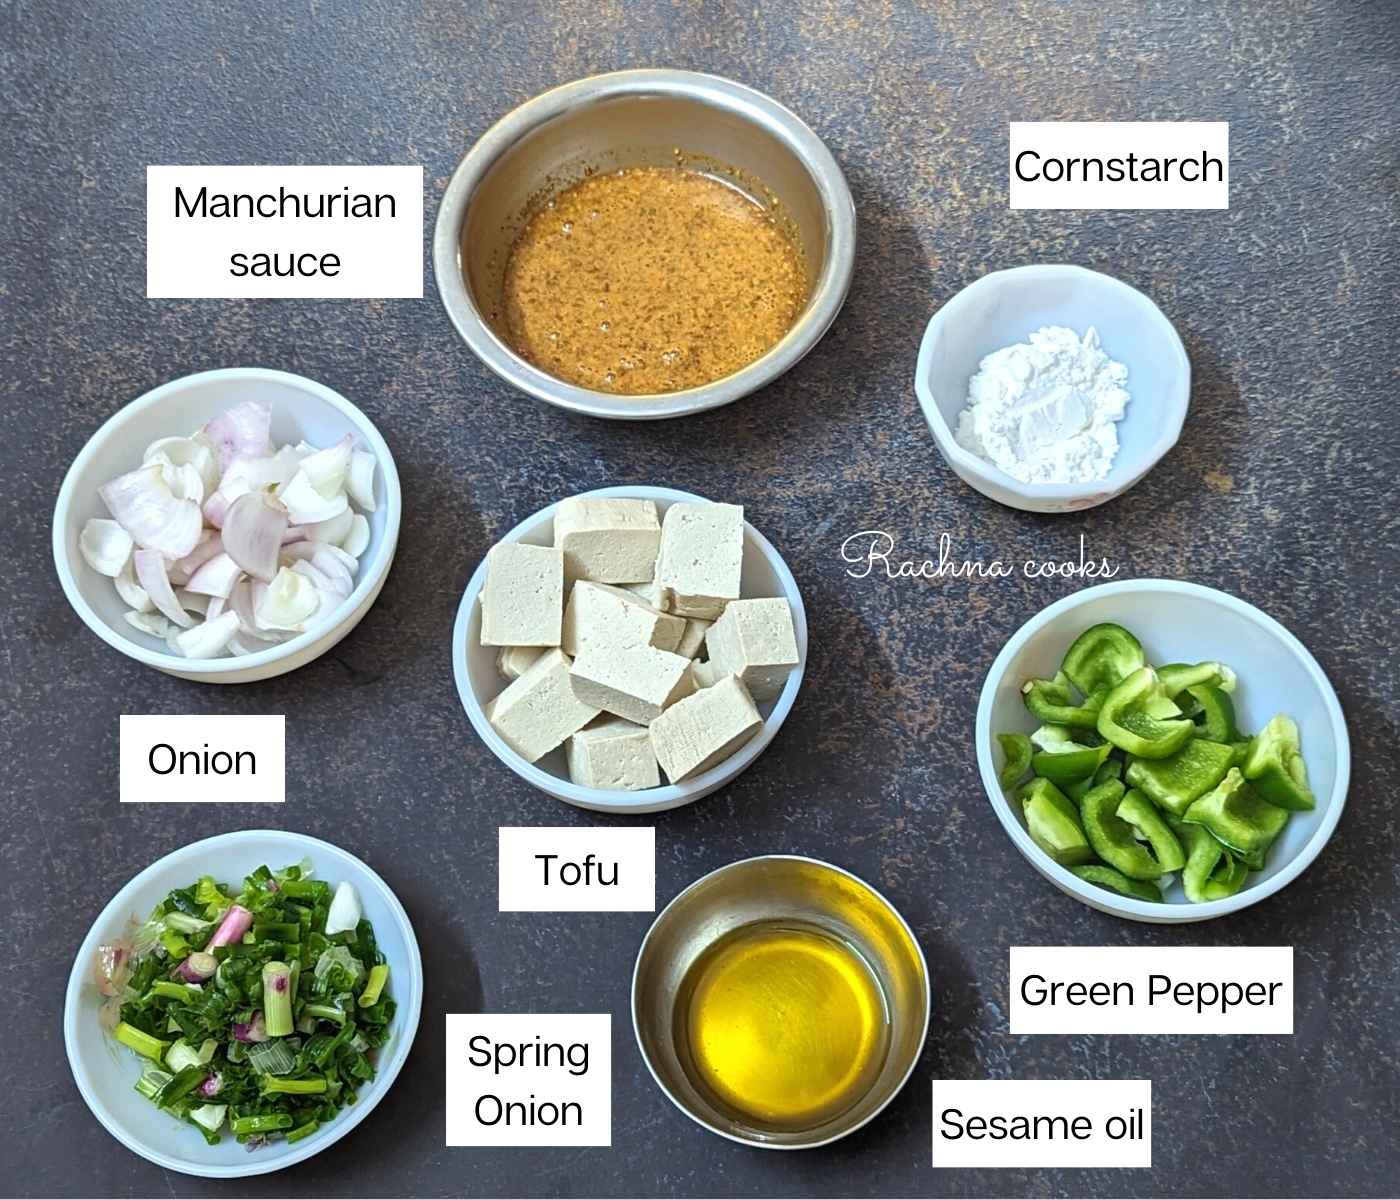 The ingredients for making tofu manchurian